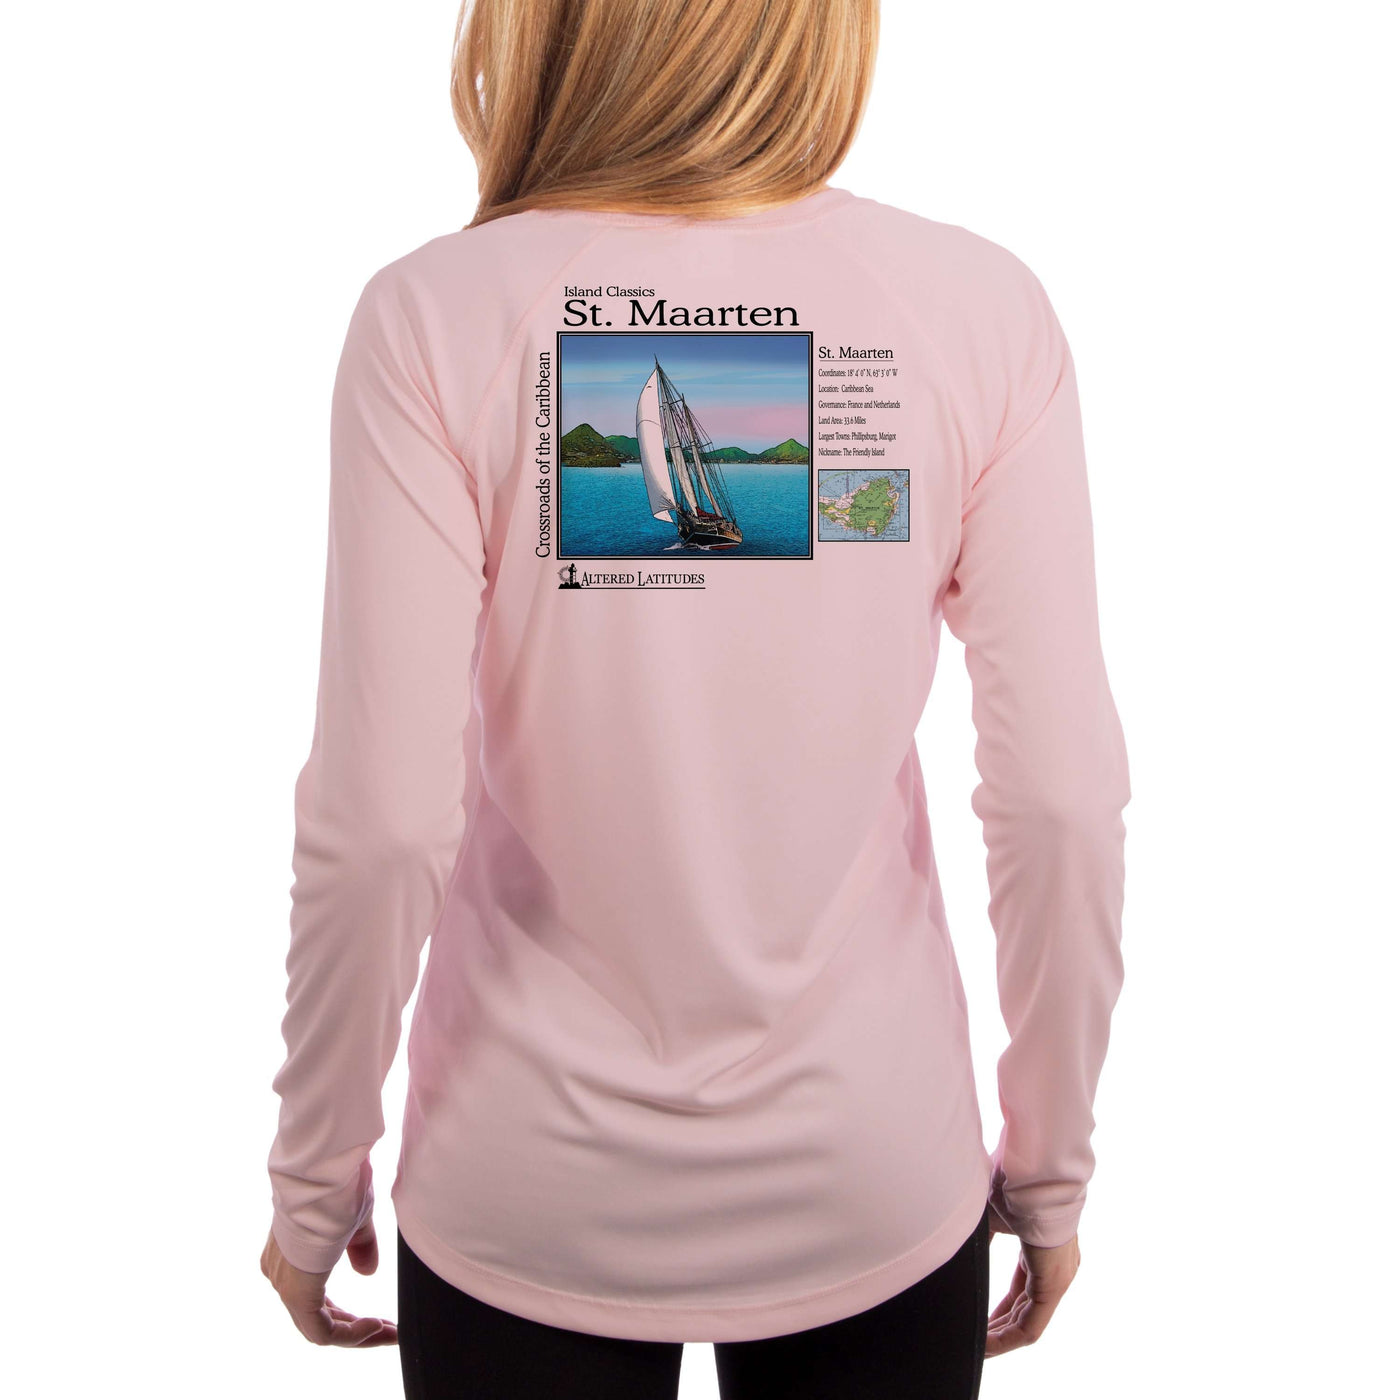 Island Classics St. Maarten Women's UPF 50+ UV Sun Protection Long Sleeve T-shirt